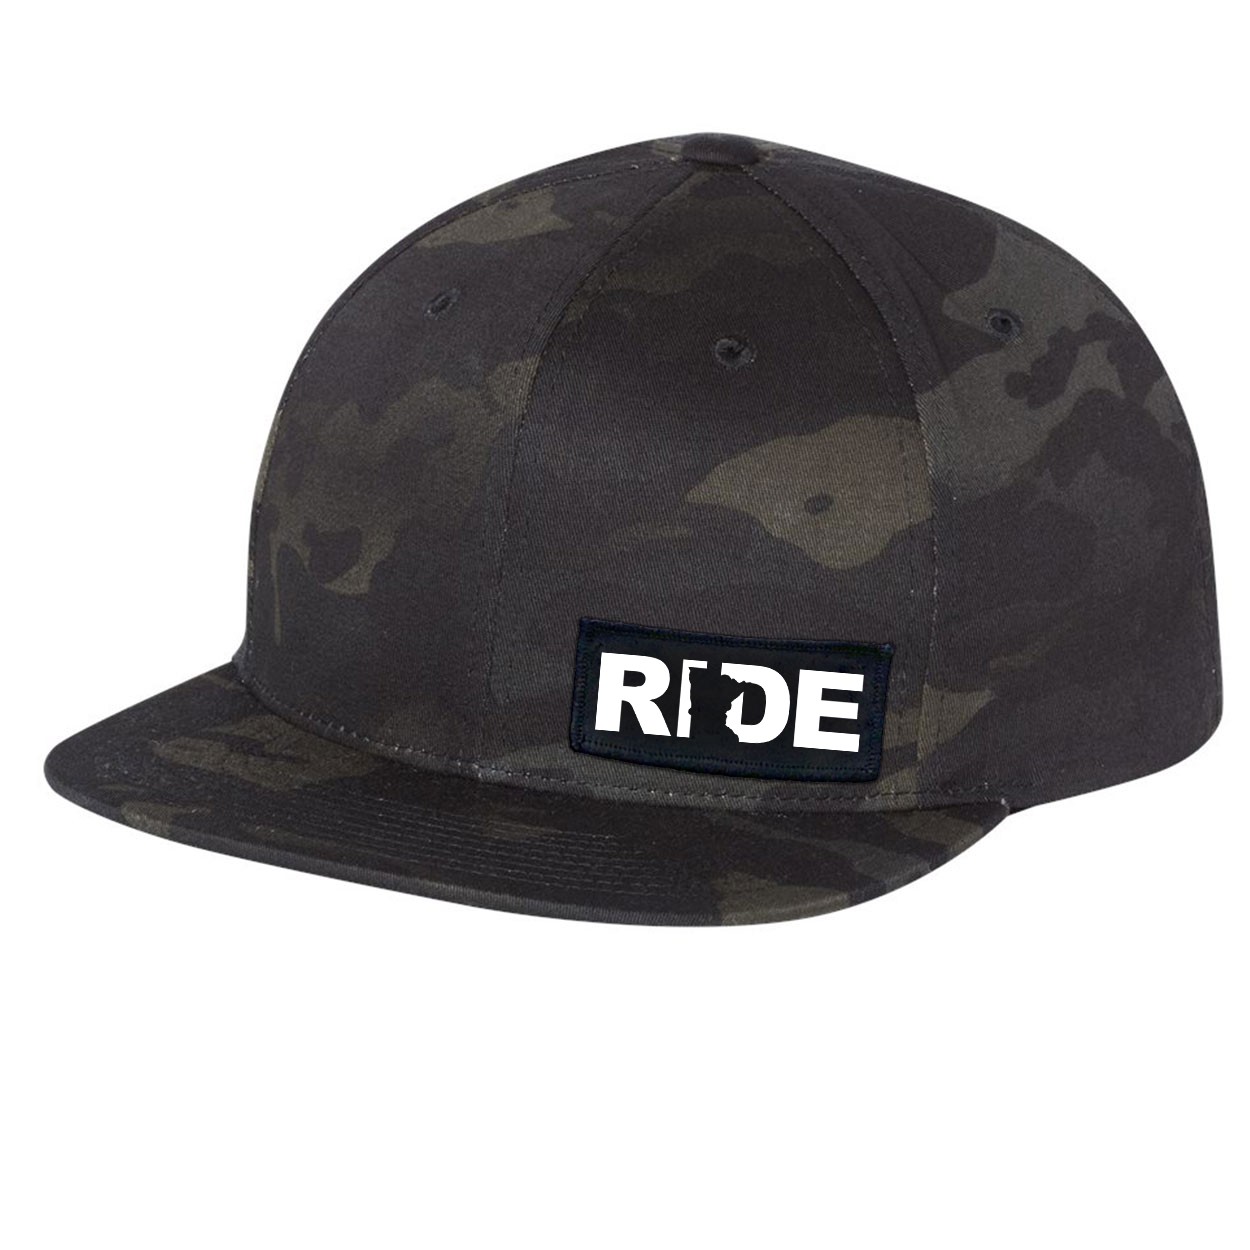 Ride Minnesota Night Out Woven Patch Flat Brim Snapback Hat Black Camo (White Logo)